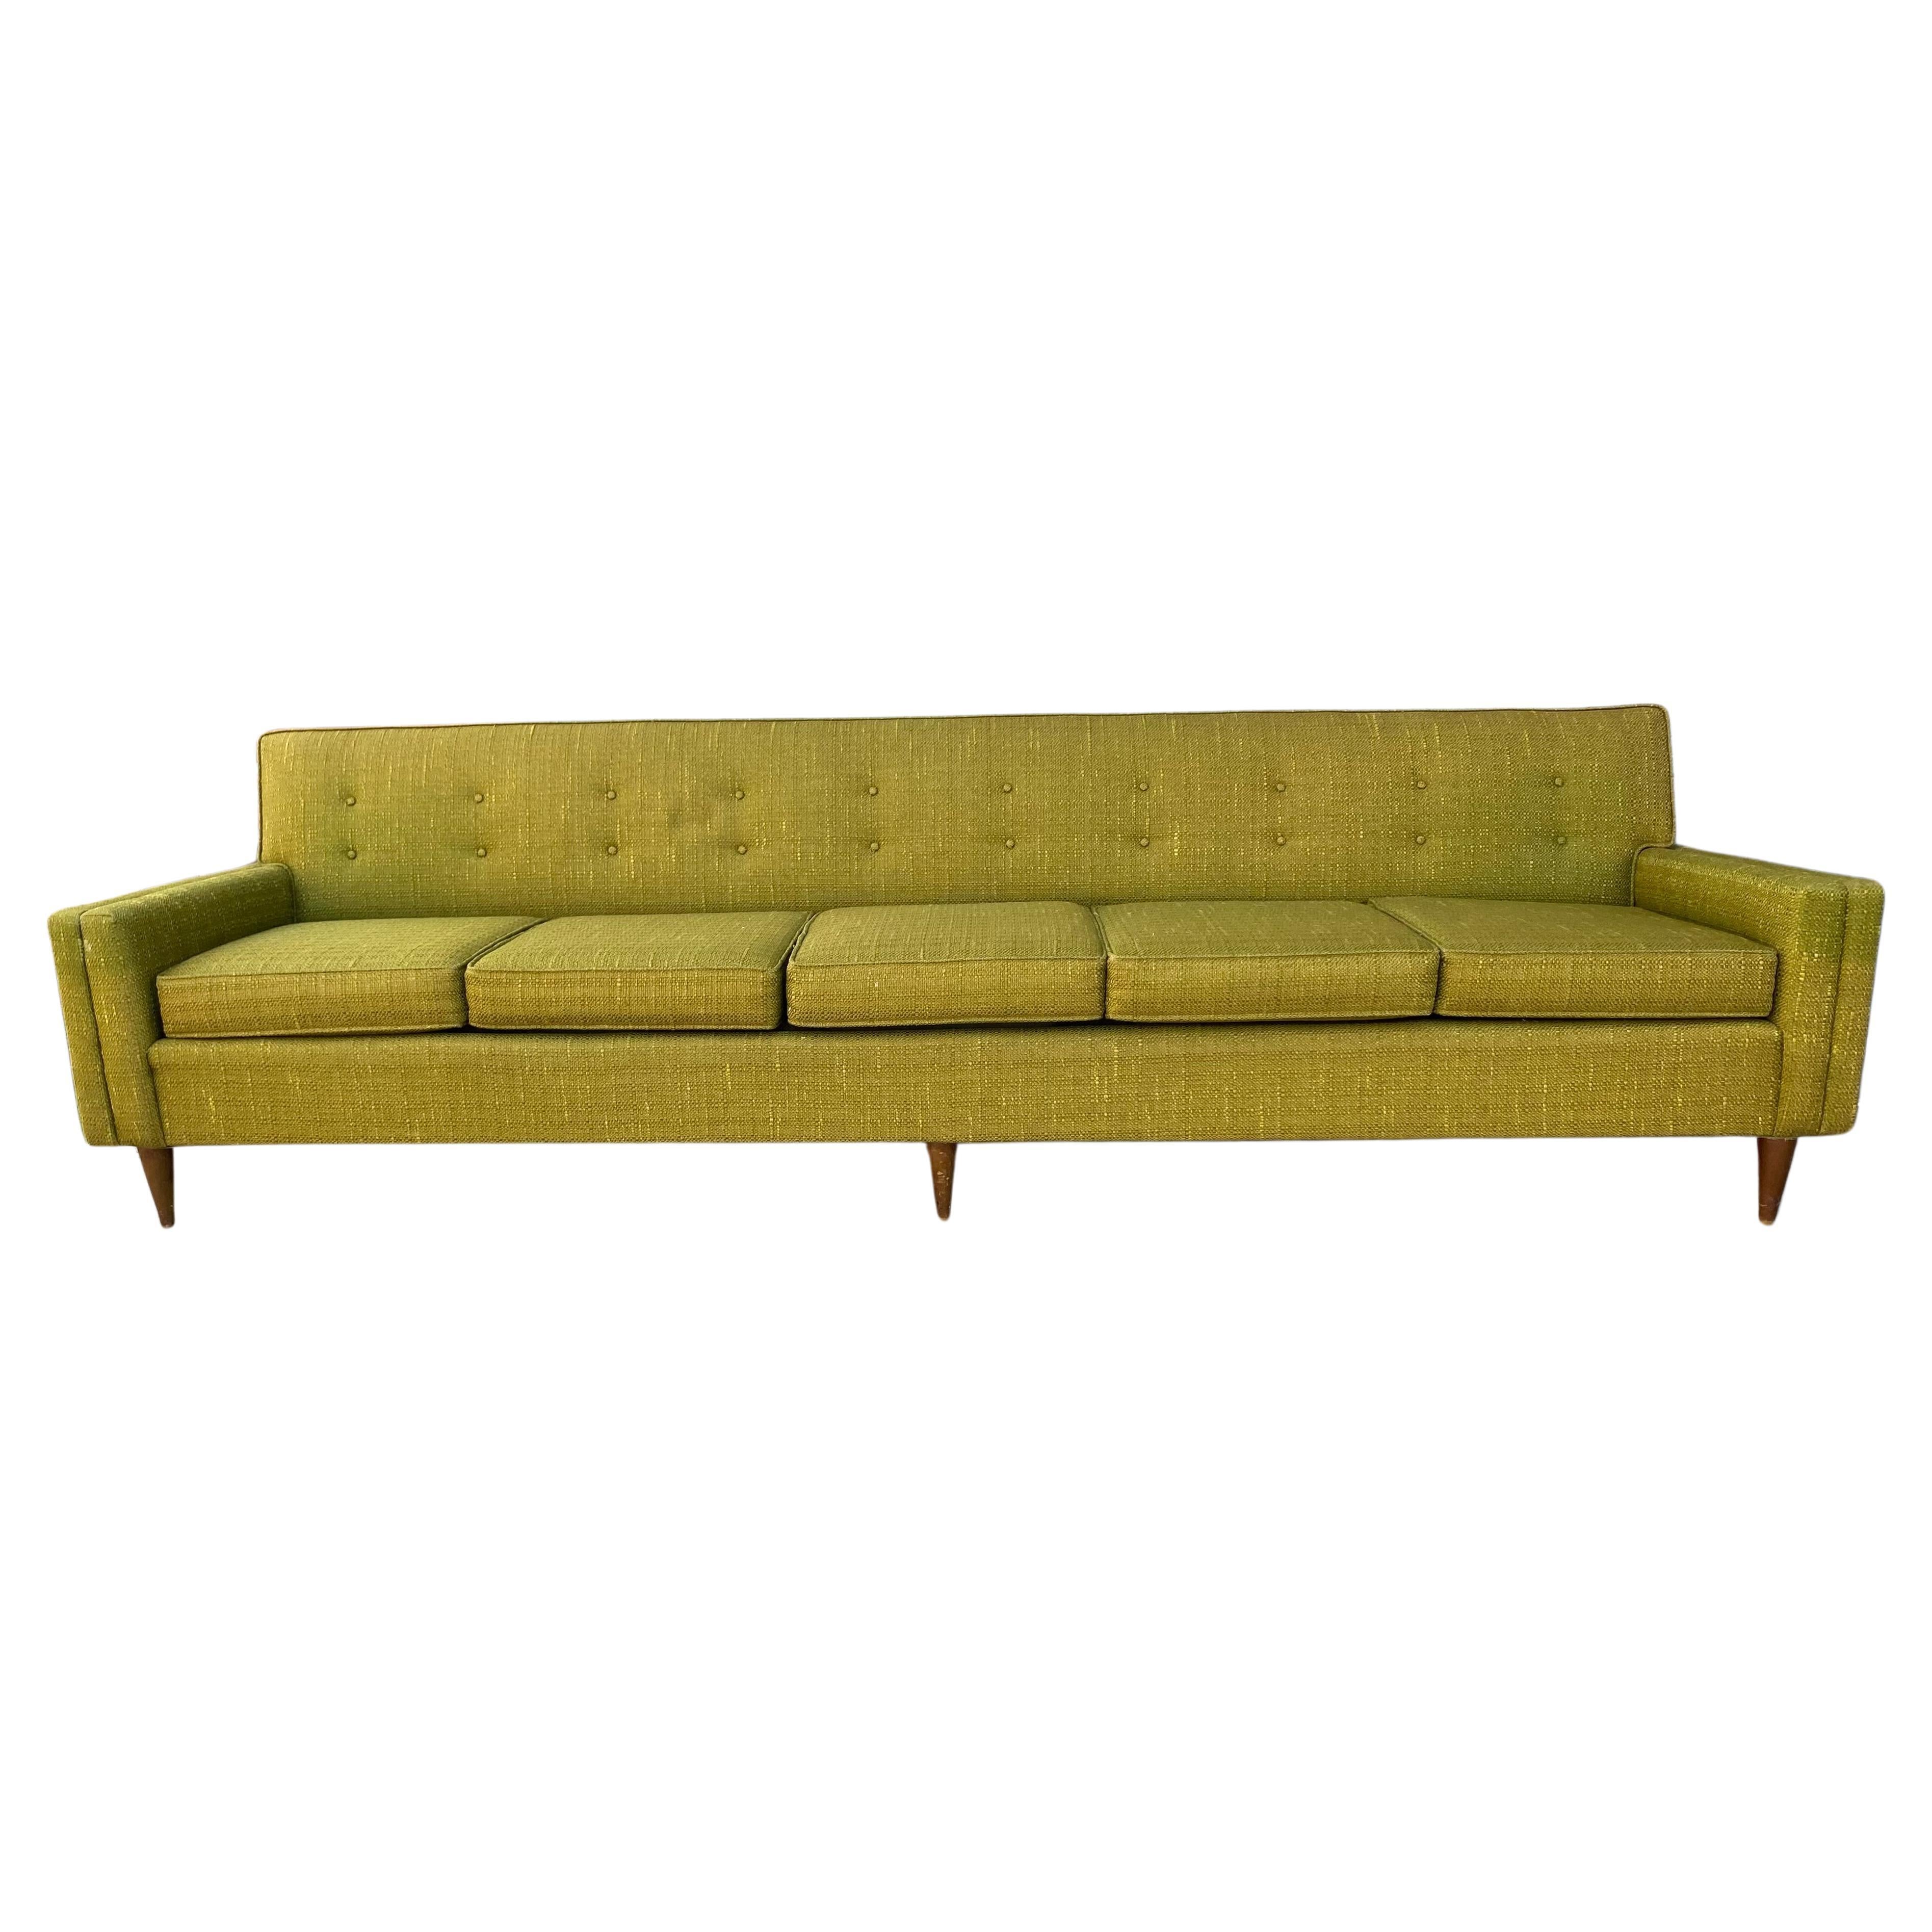 Klassisches modernistisches 110-Zoll-"Long"-Sofa, das Paul McCobb zugeschrieben wird